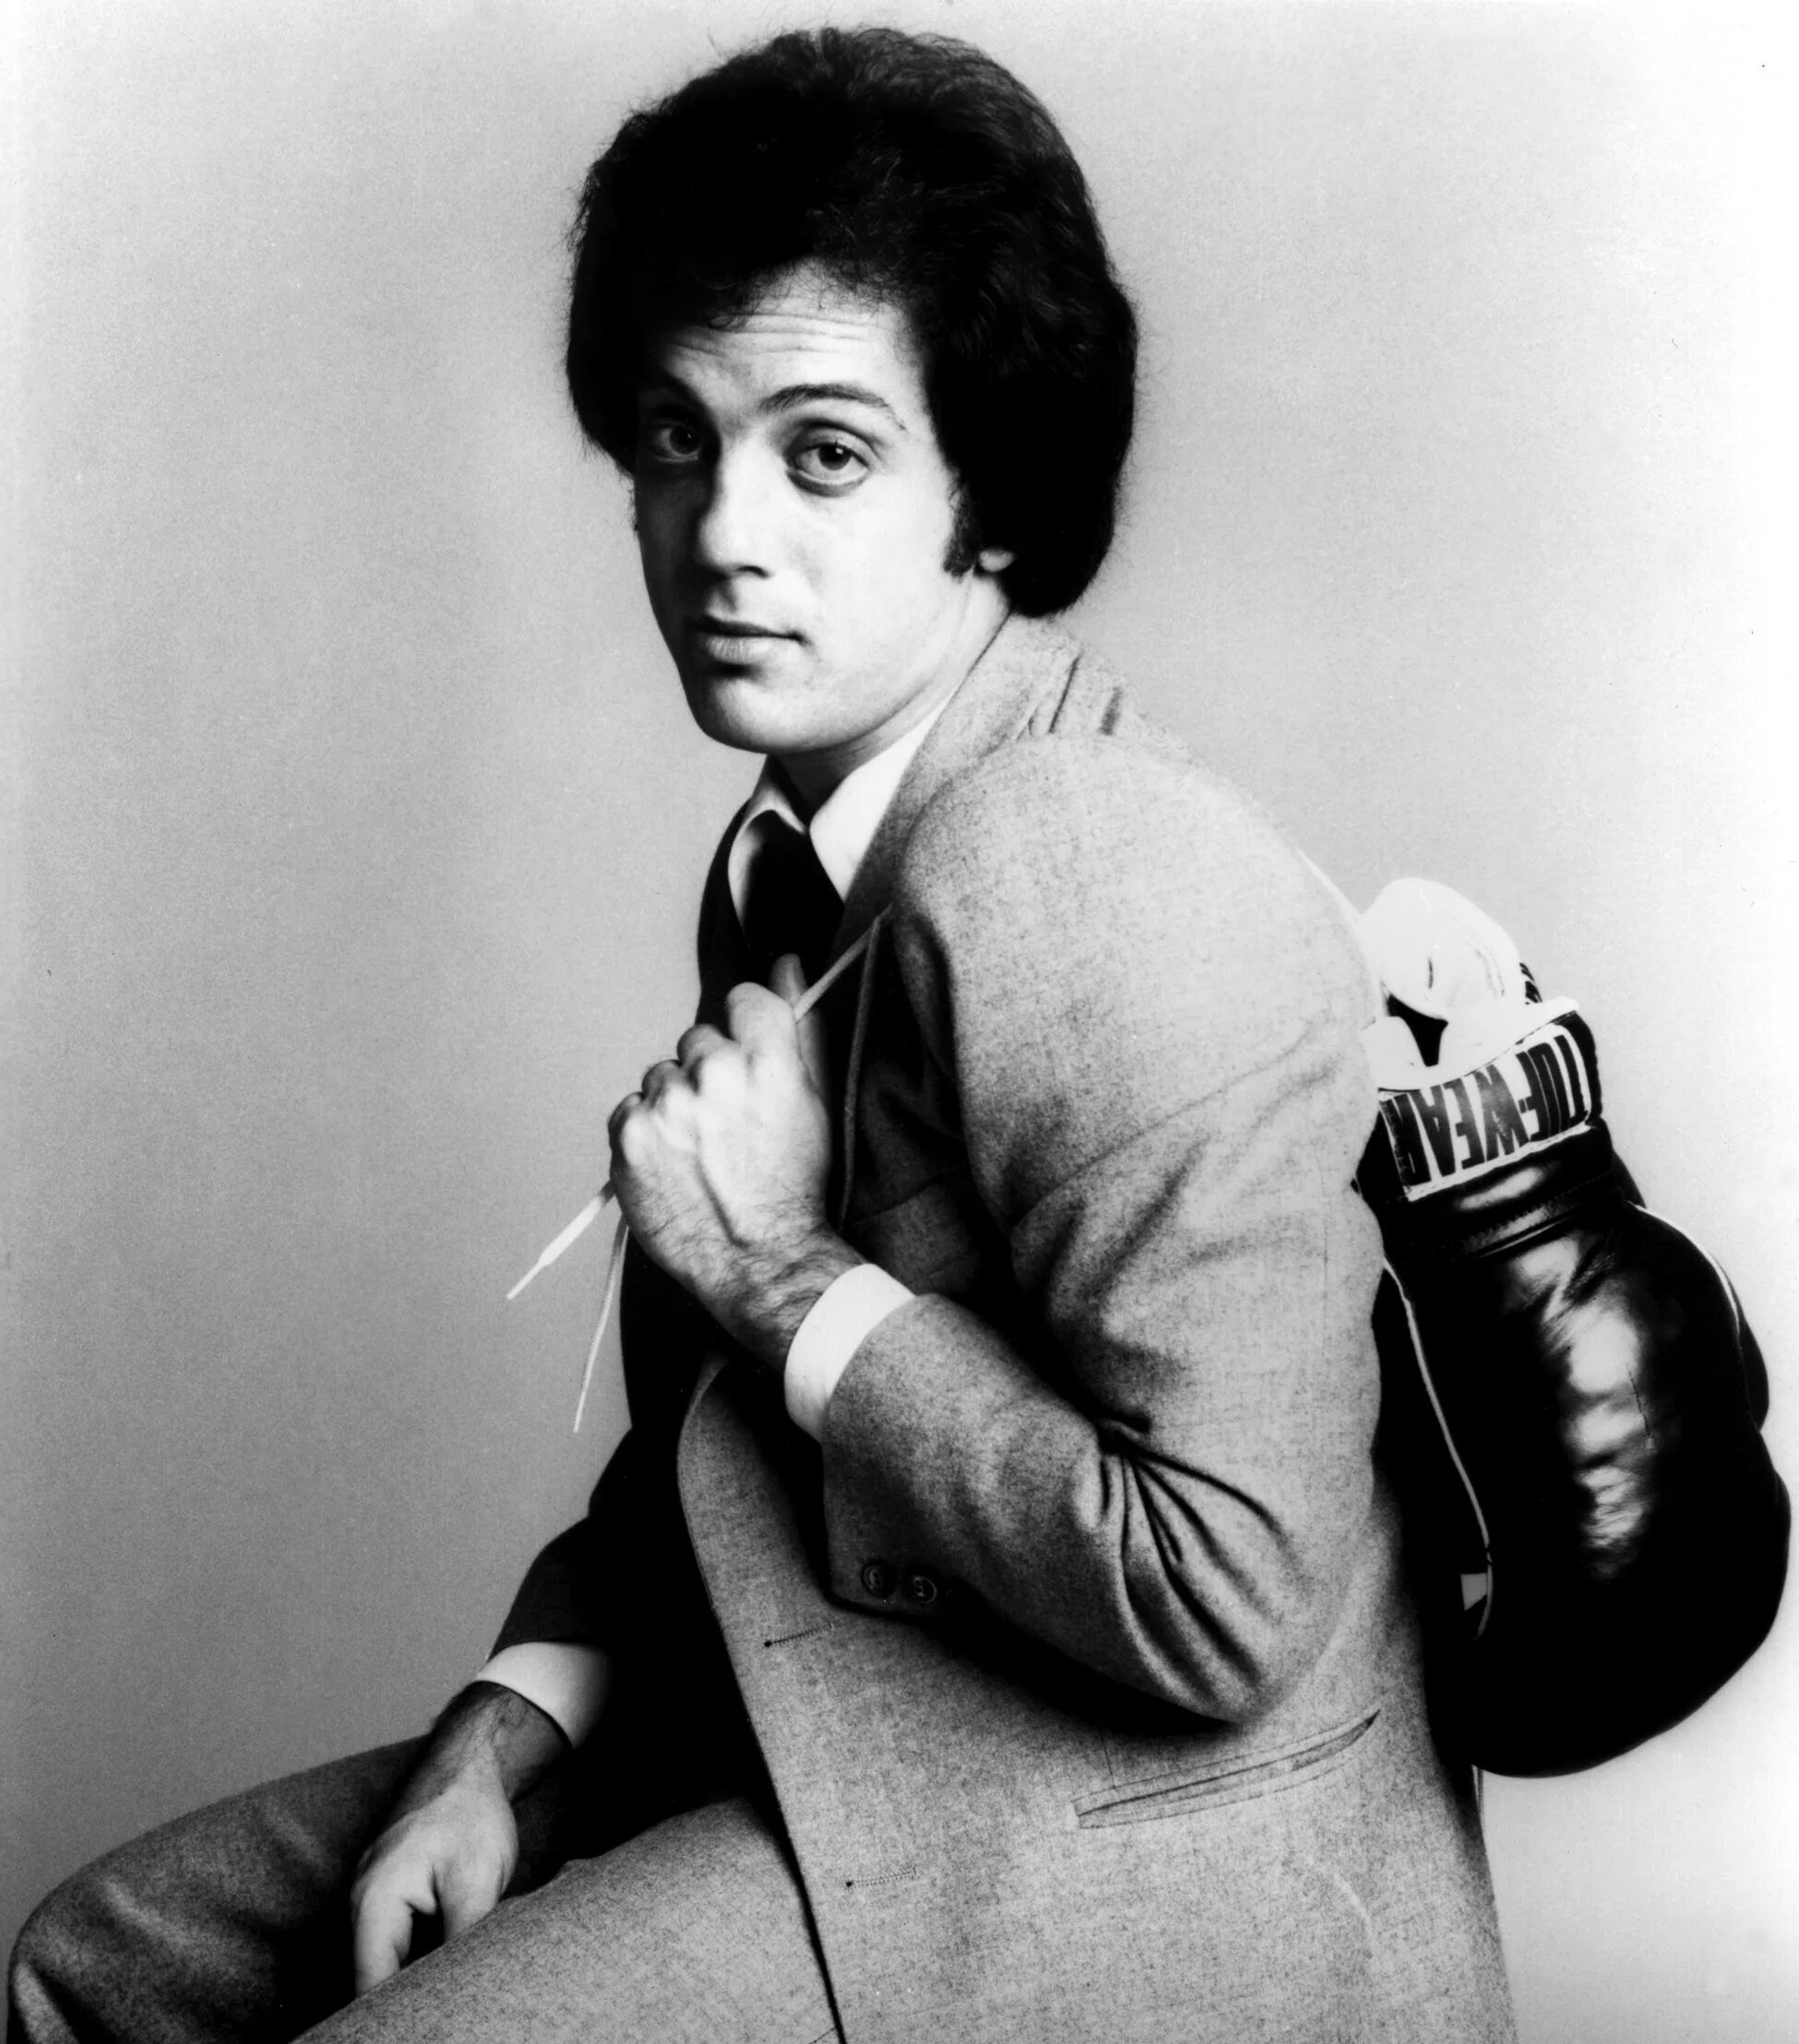 Billy a matter. Billy Joel. Ишддш огуд. Билли Джоэл в молодости. Billy Joel 1970.